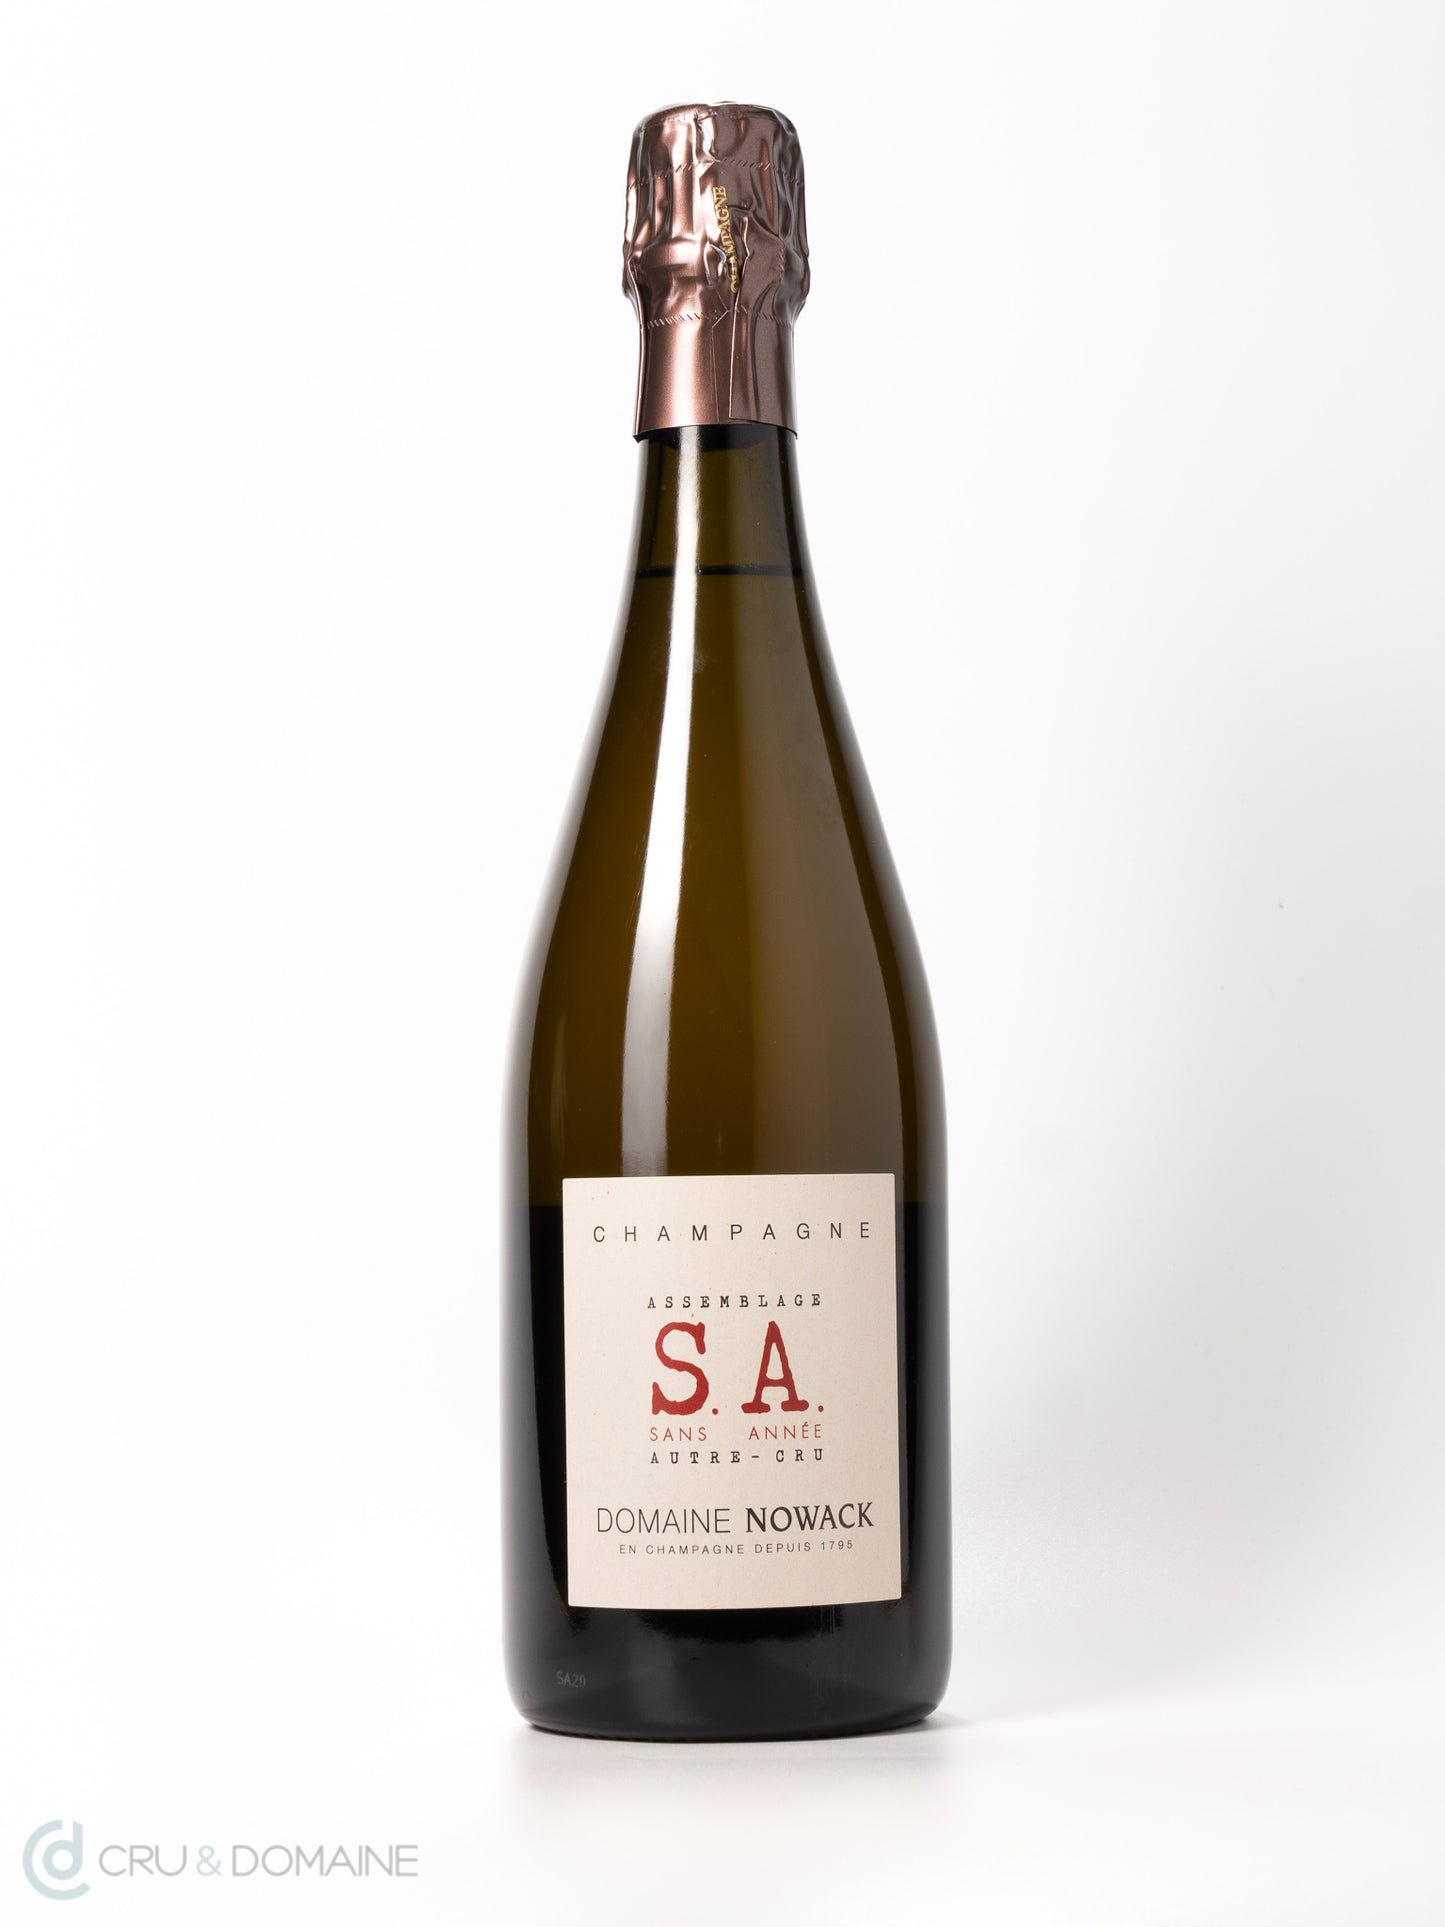 NV Domaine Nowack, ‘Assemblage S.A.’, Autre-Cru, Extra Brut, Champagne